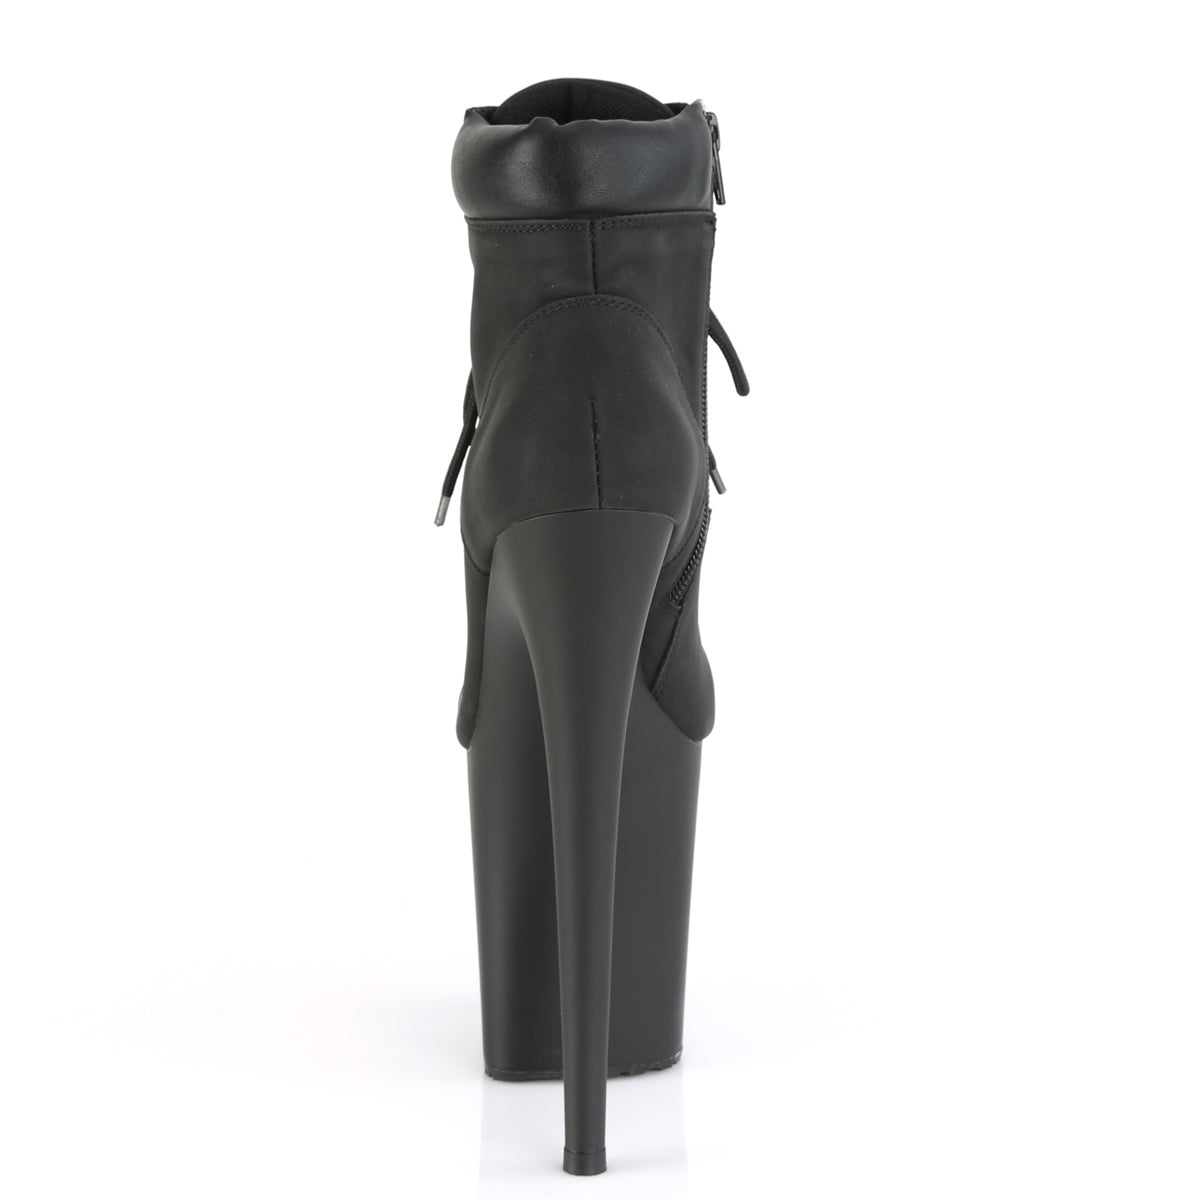 FLAMINGO-800TL-02 8" Heel Black Nubuck Pole Dancer Platforms-Pleaser- Sexy Shoes Fetish Footwear